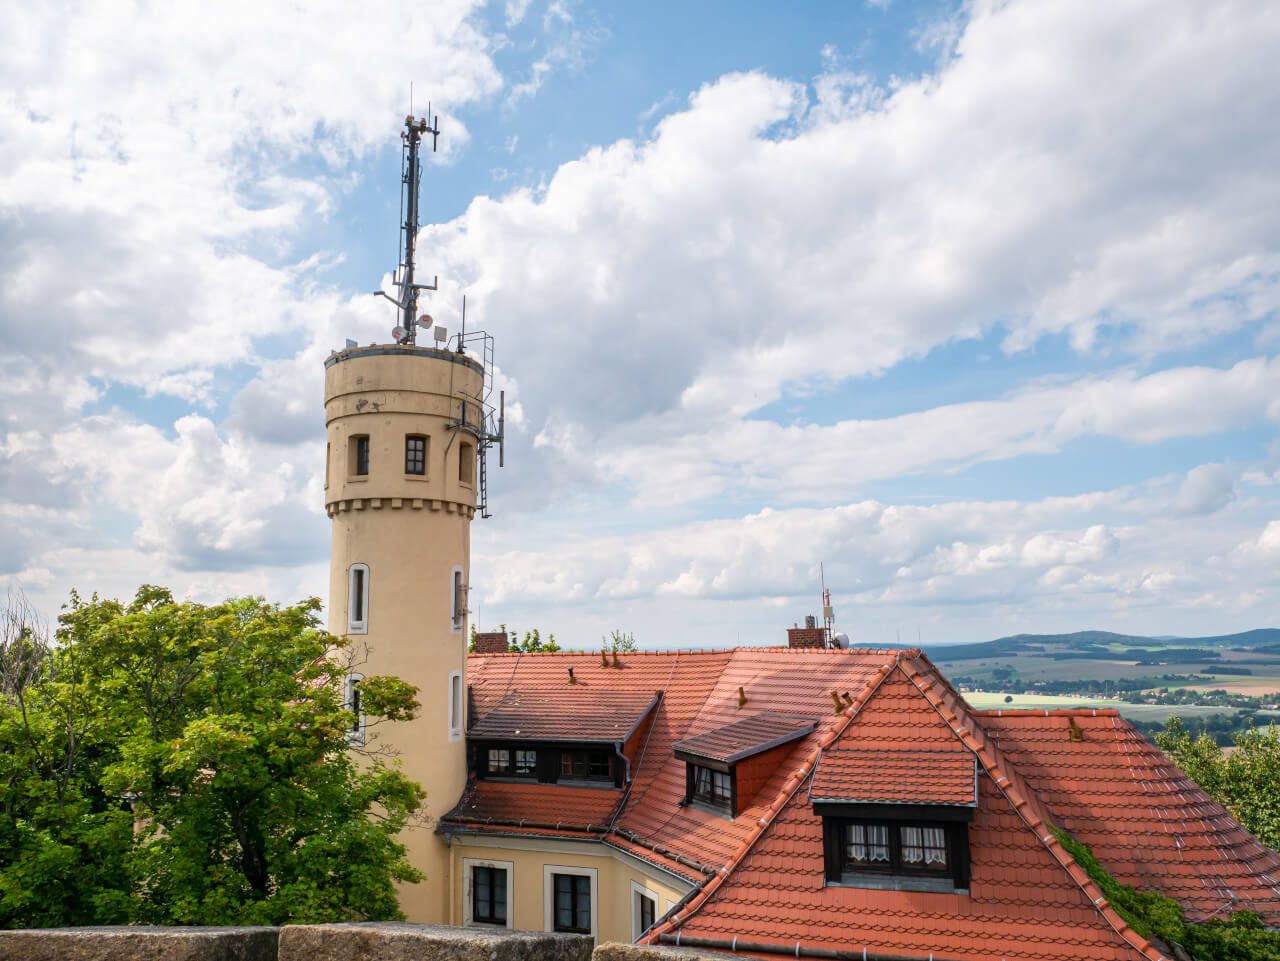 Goerlitz wieża Landeskrone